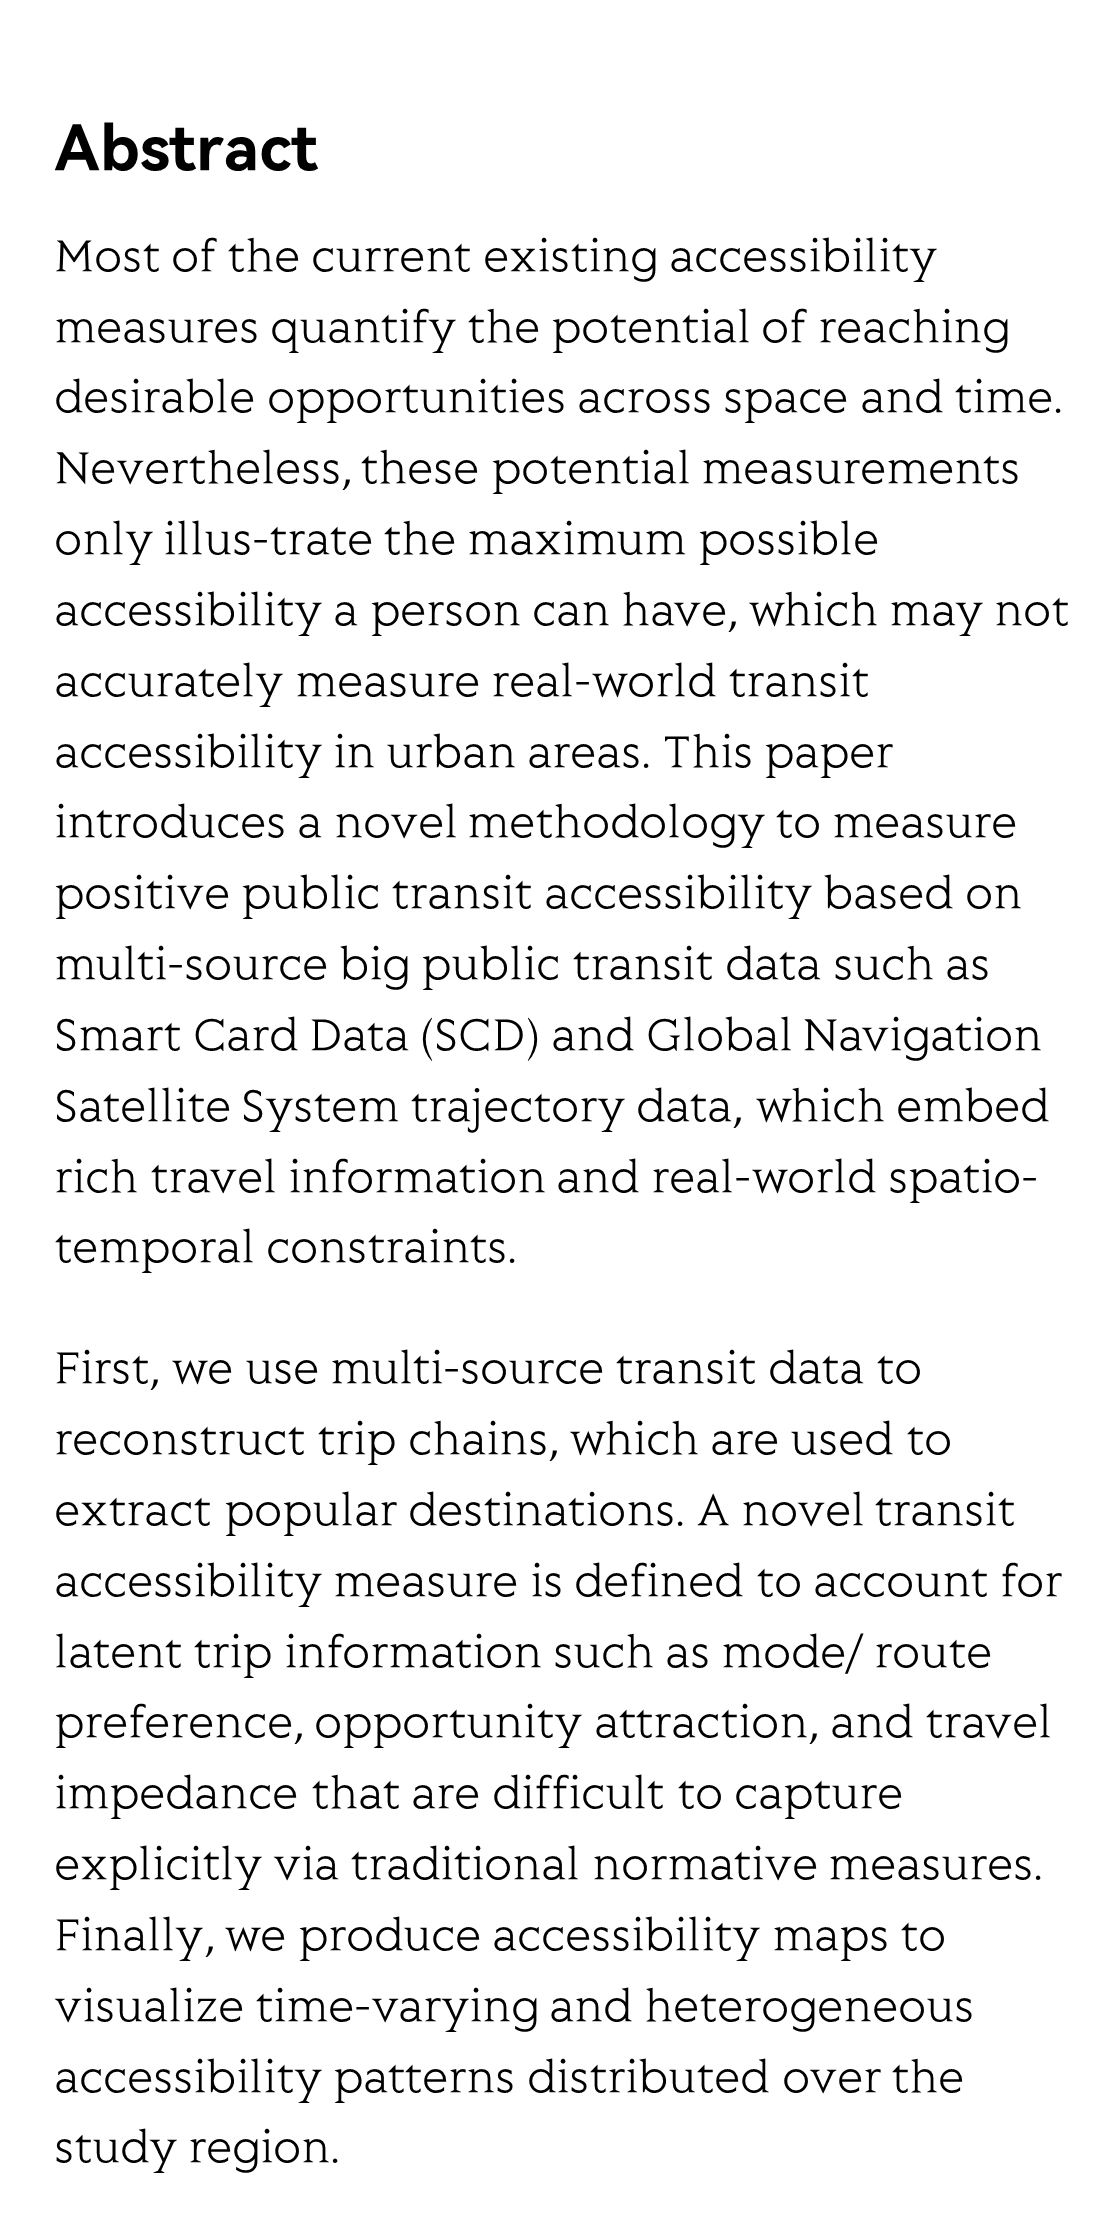 Measuring positive public transit accessibility using big transit data_2